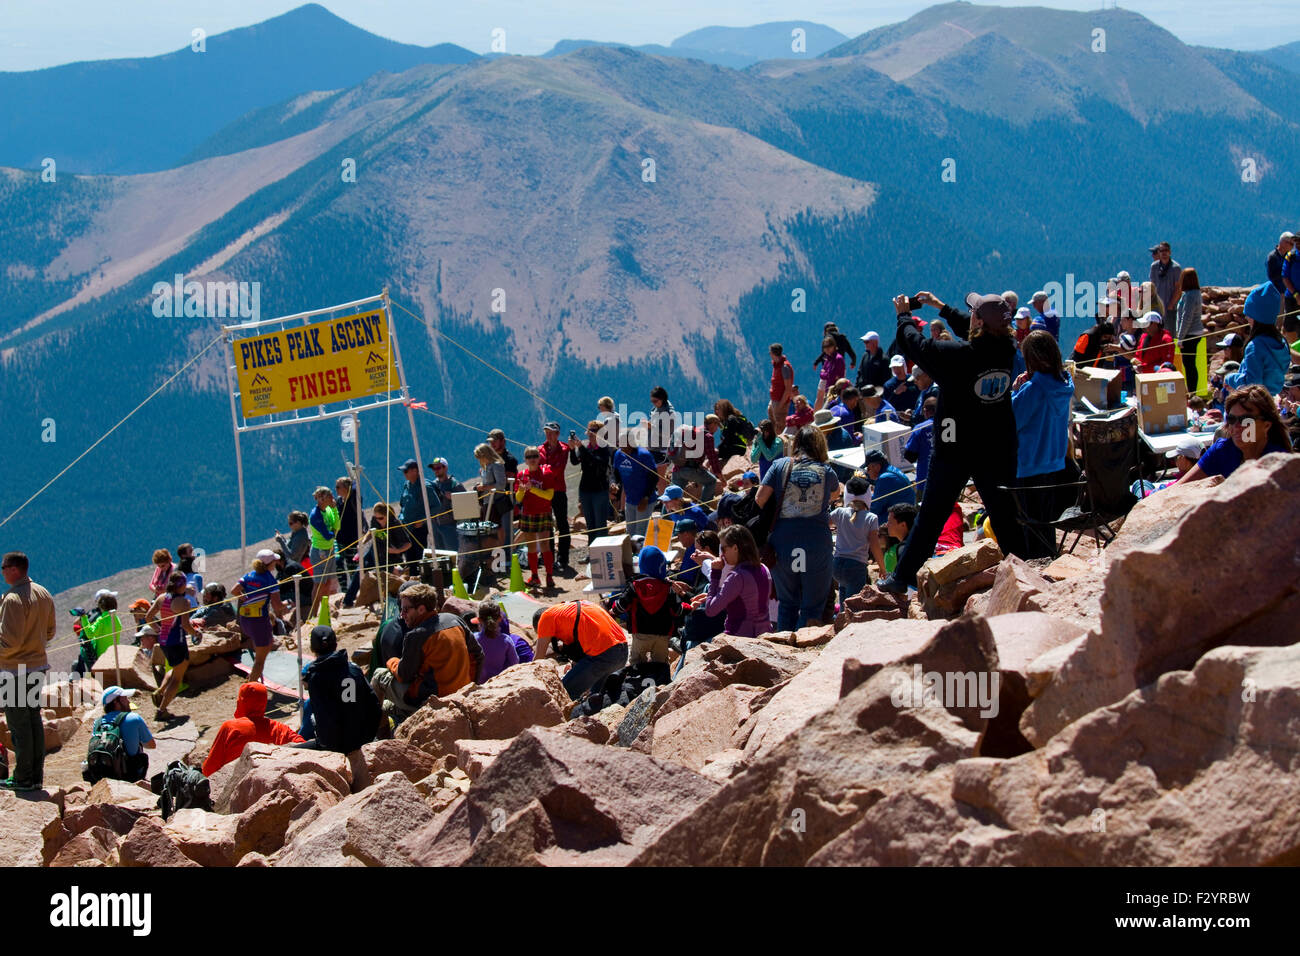 Pikes Peak Ascent Finish Line Stock Photo